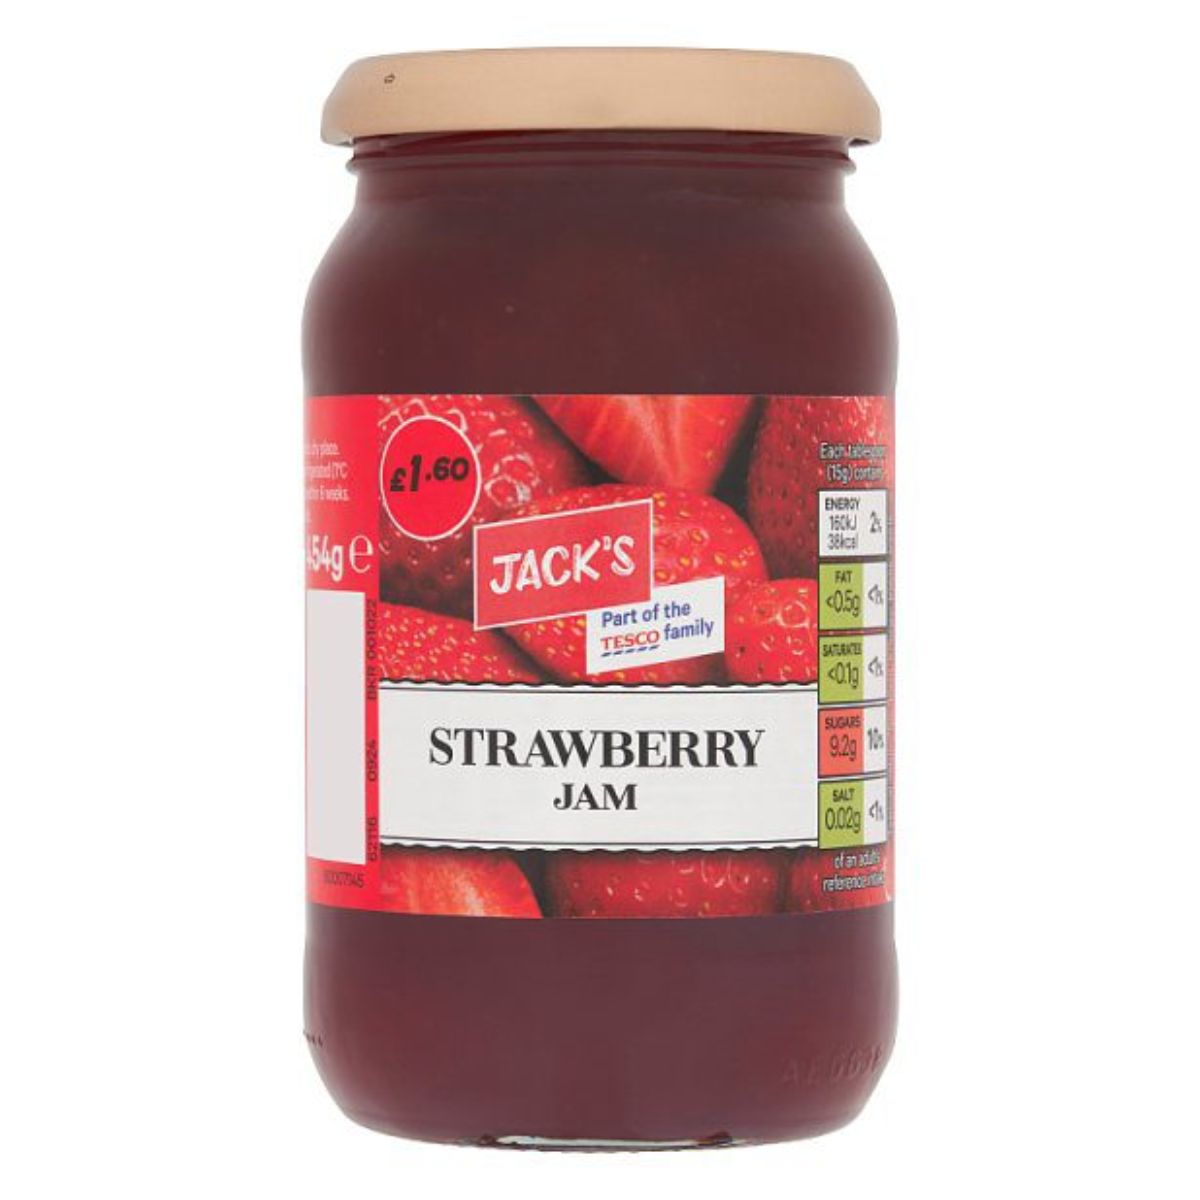 A jar of Jacks - Strawberry Jam - 454g on a white background.